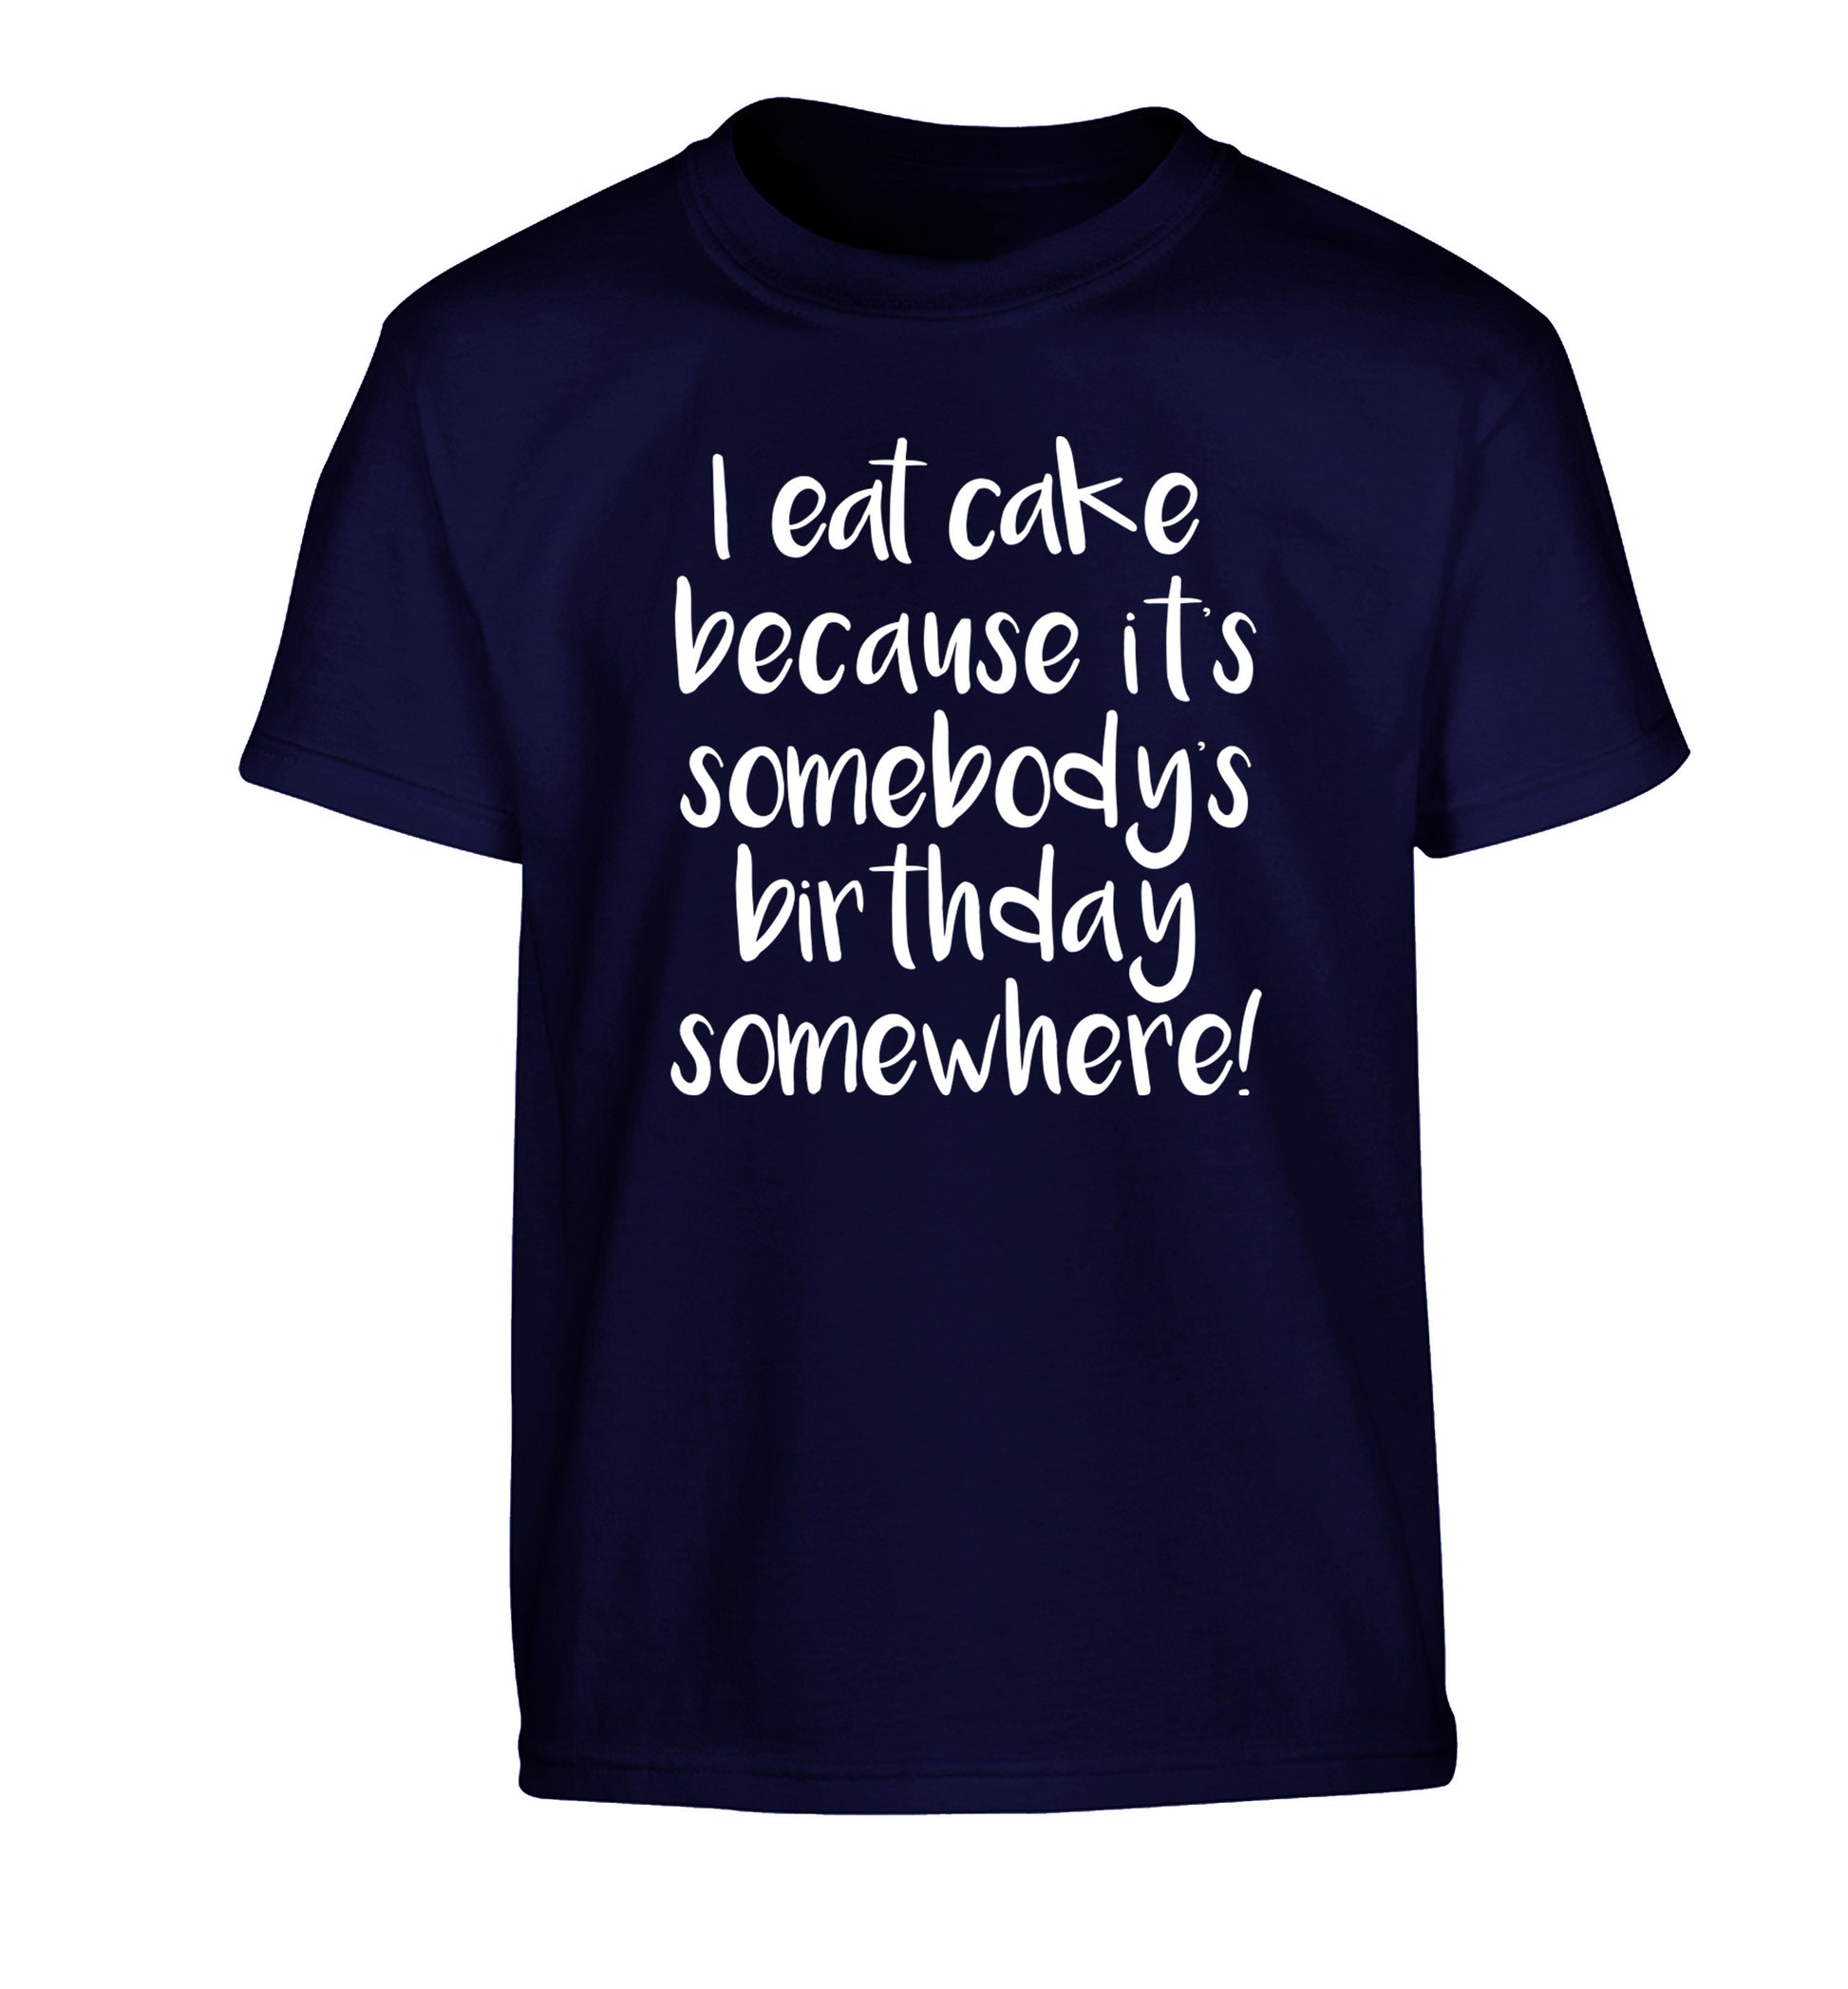 I eat cake because it's somebody's birthday somewhere! Children's navy Tshirt 12-14 Years